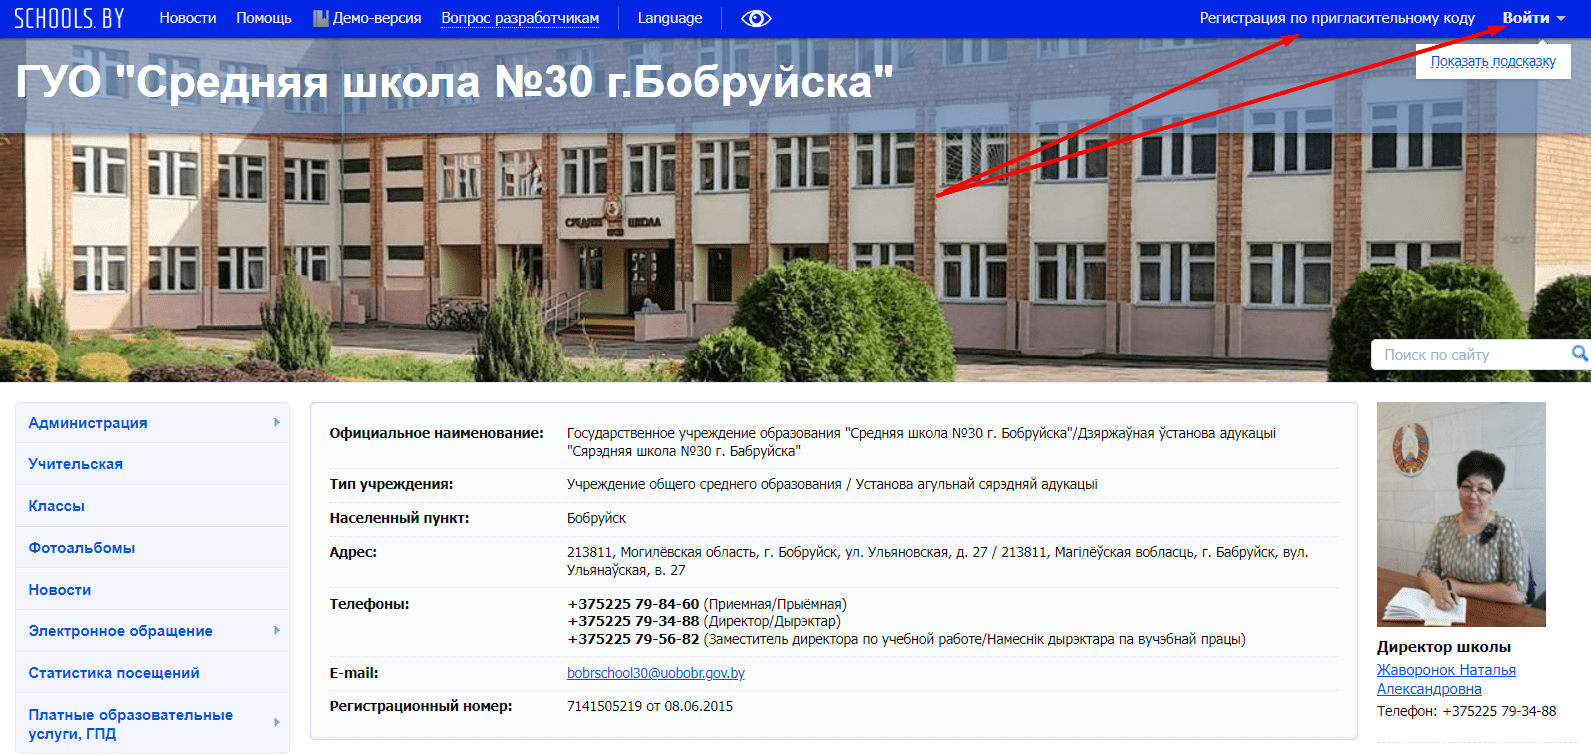 Средняя школа №30 г. Бобруйска (30bobruisk.schools.by)